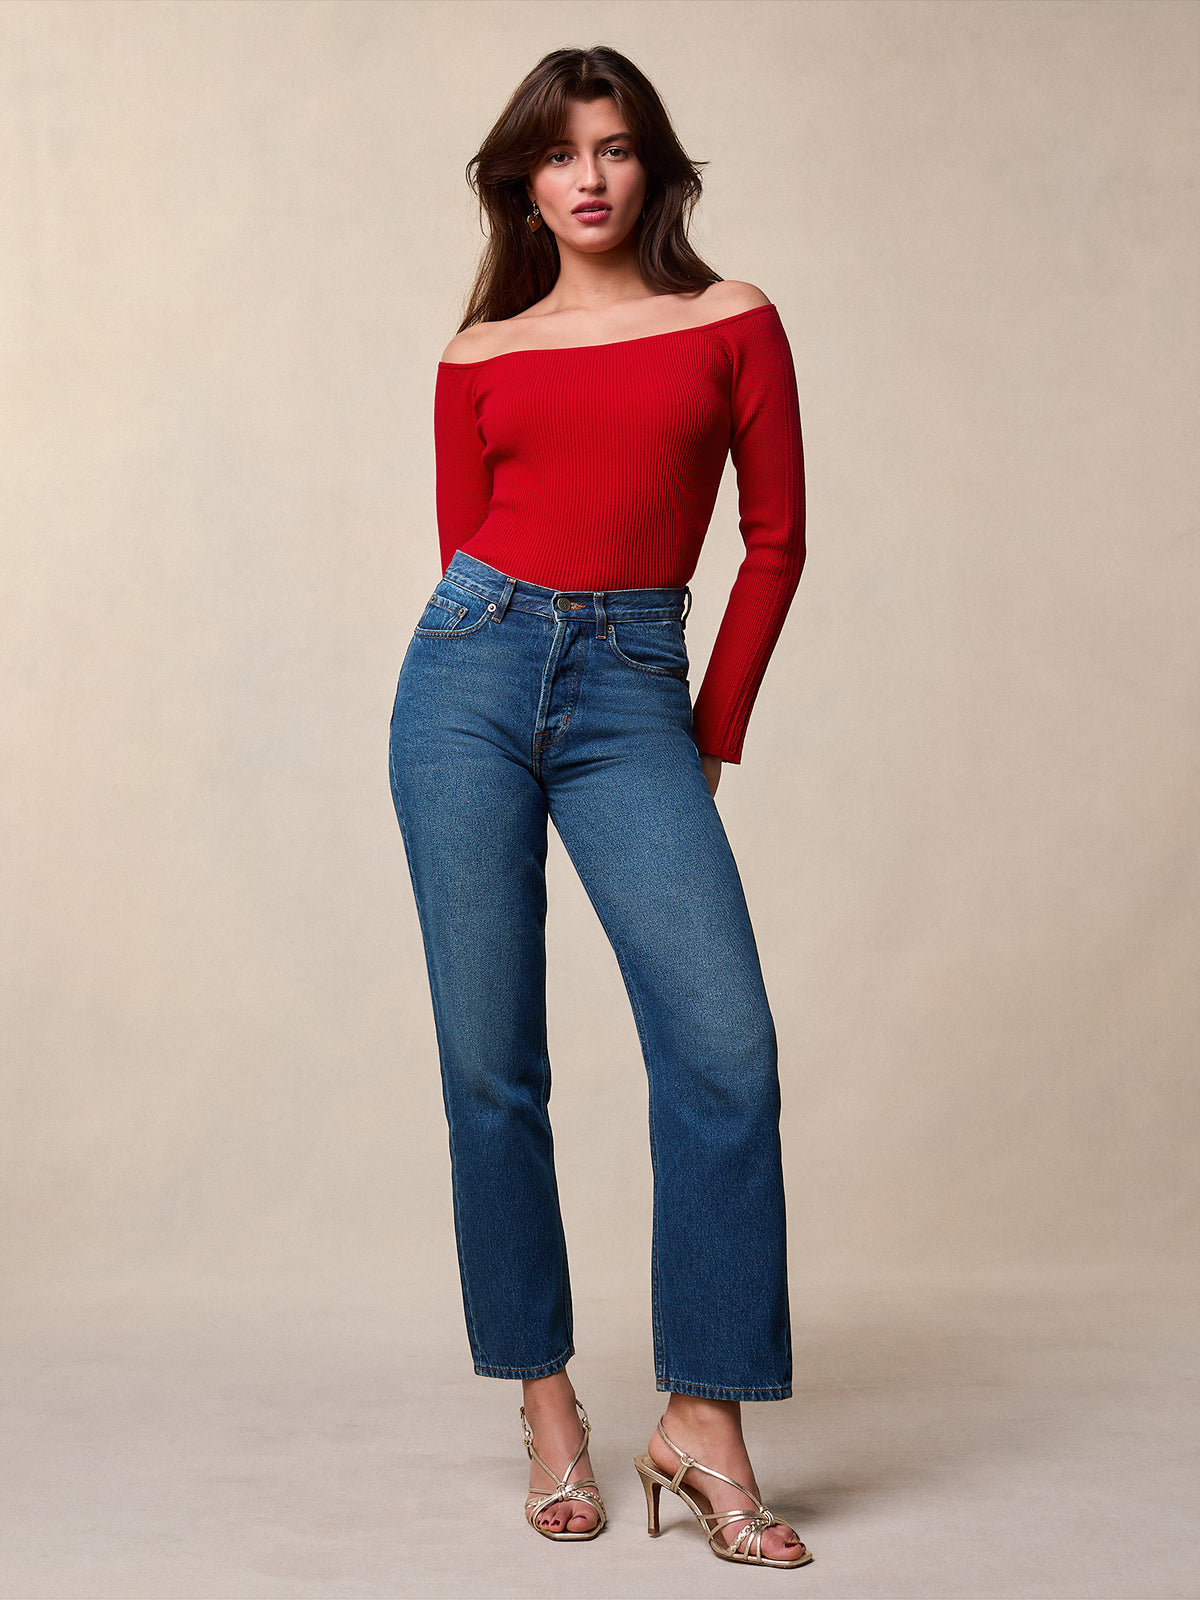 Pretty Little Thing Jeans Women's US Size 8 UK 10 EU 38 Blue Denim